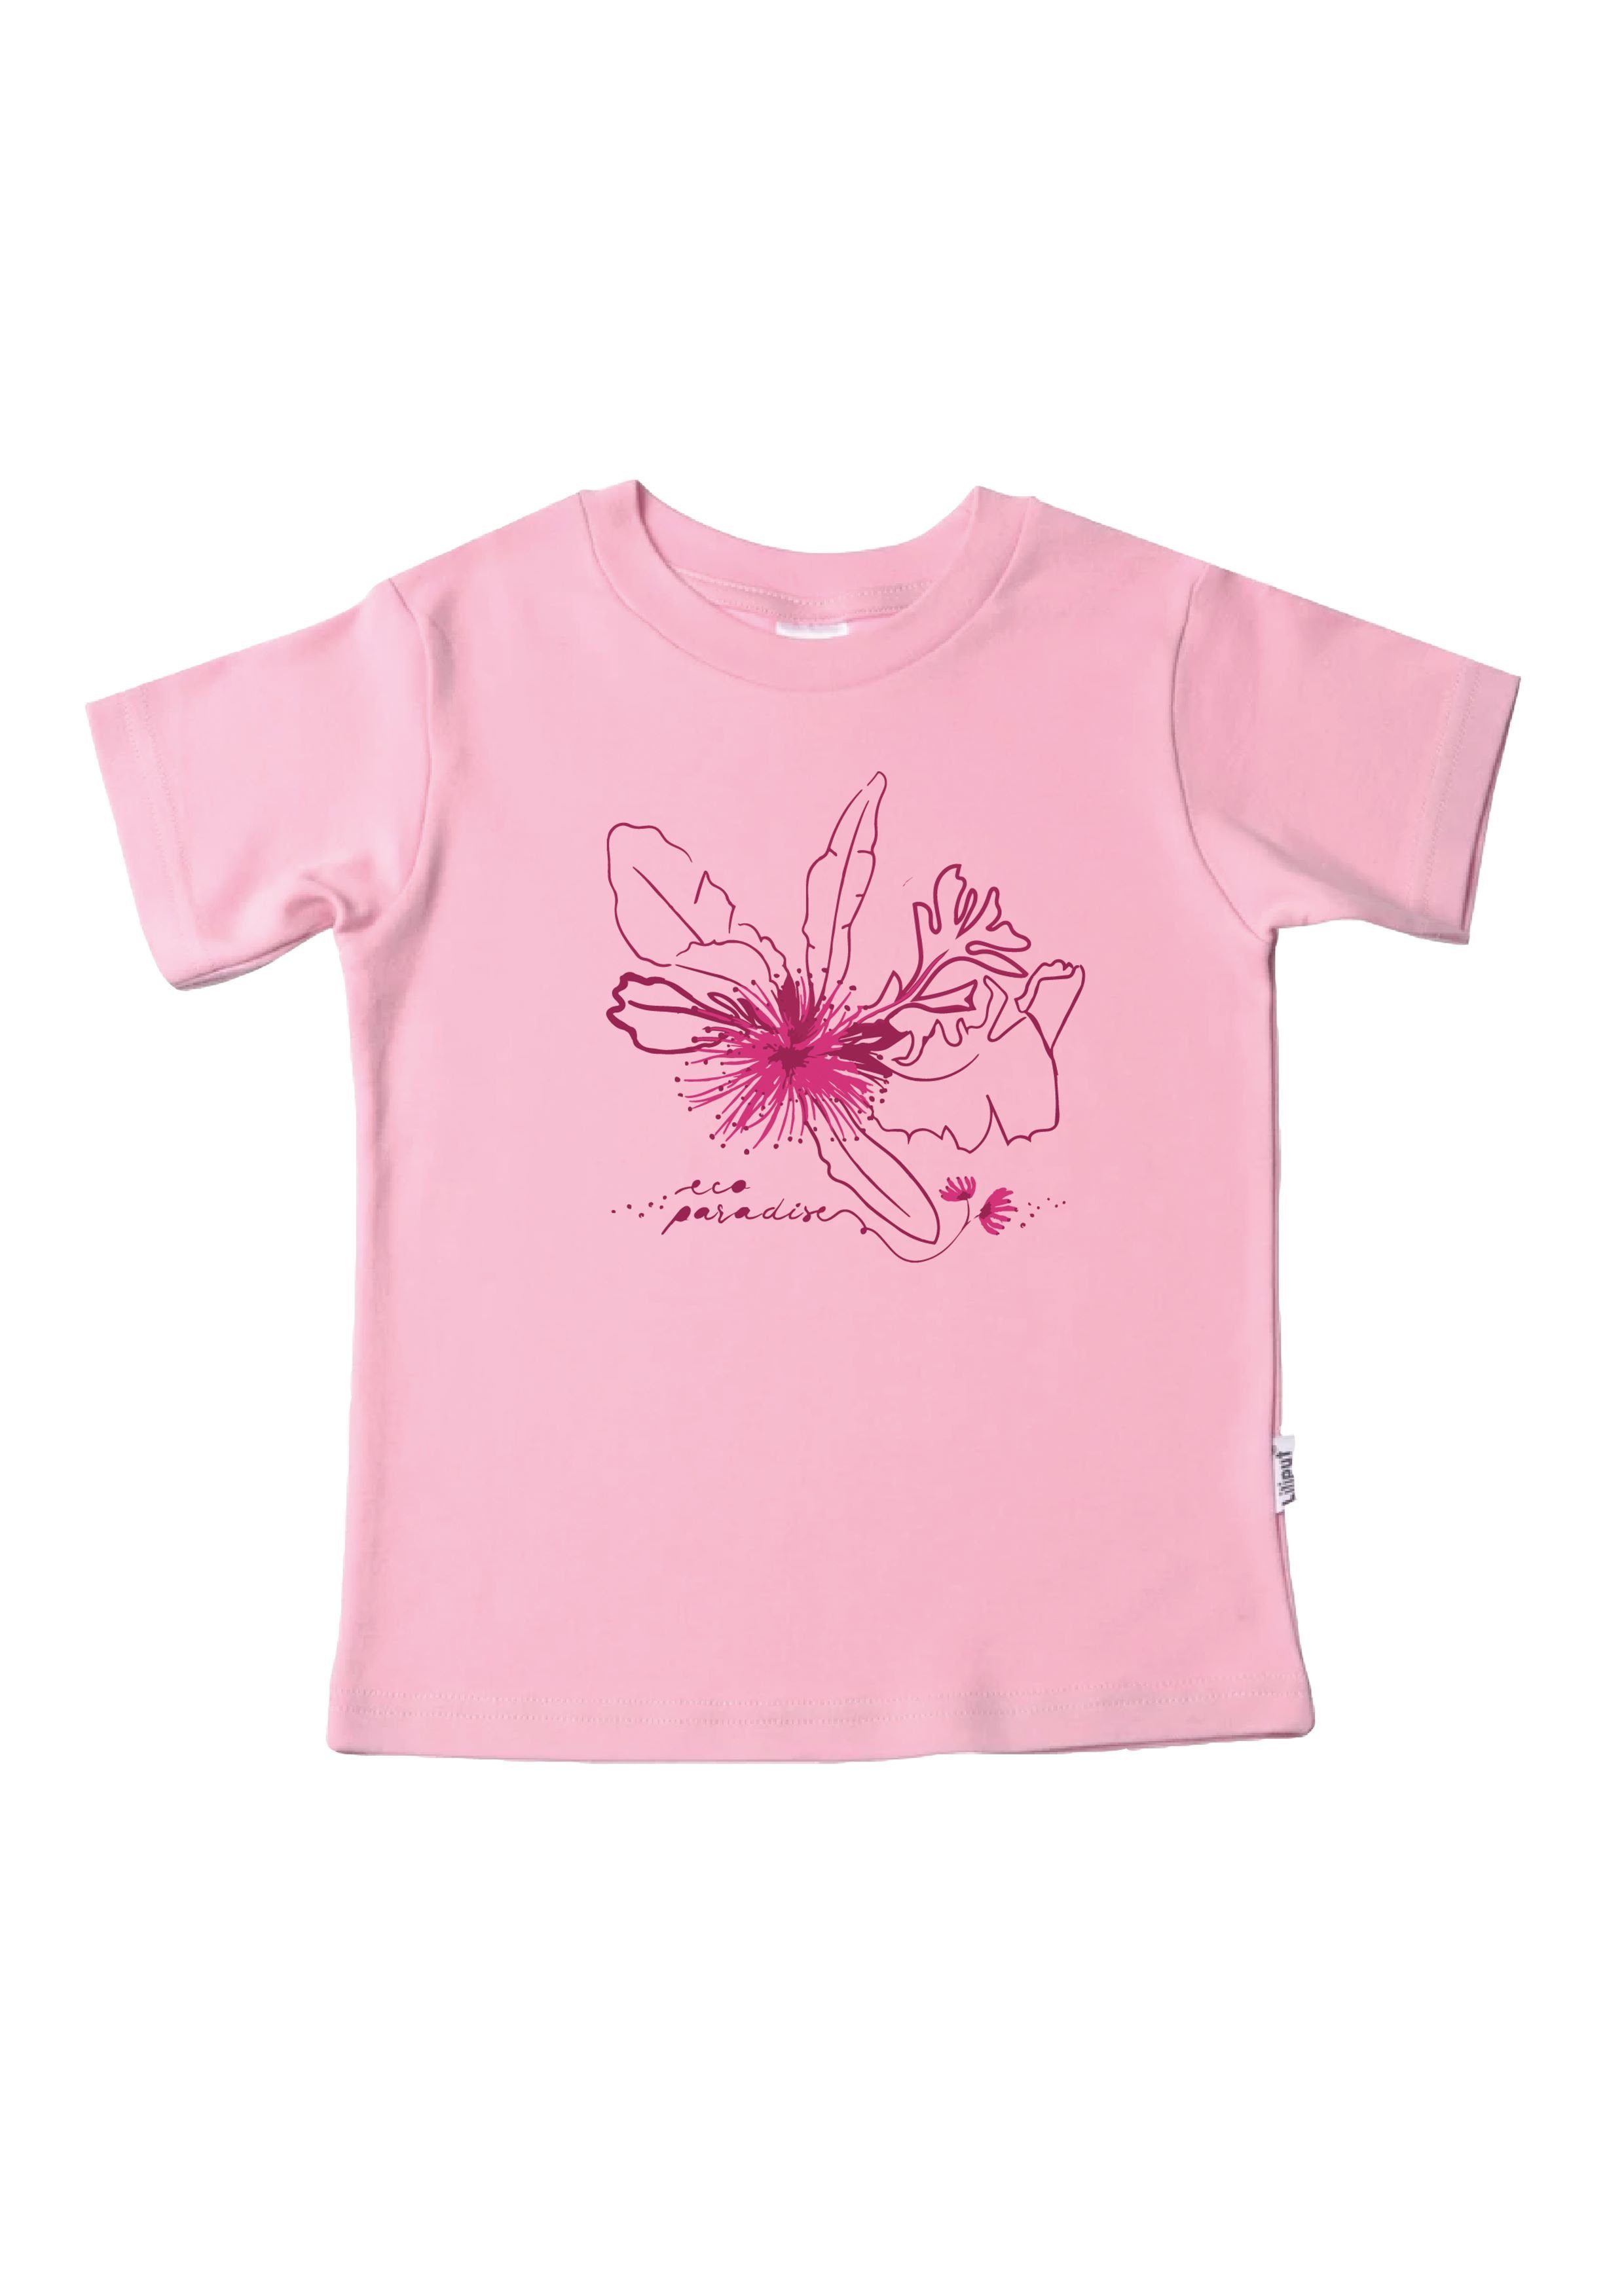 T-Shirt Blume Paradise aus Liliput Bio-Baumwolle